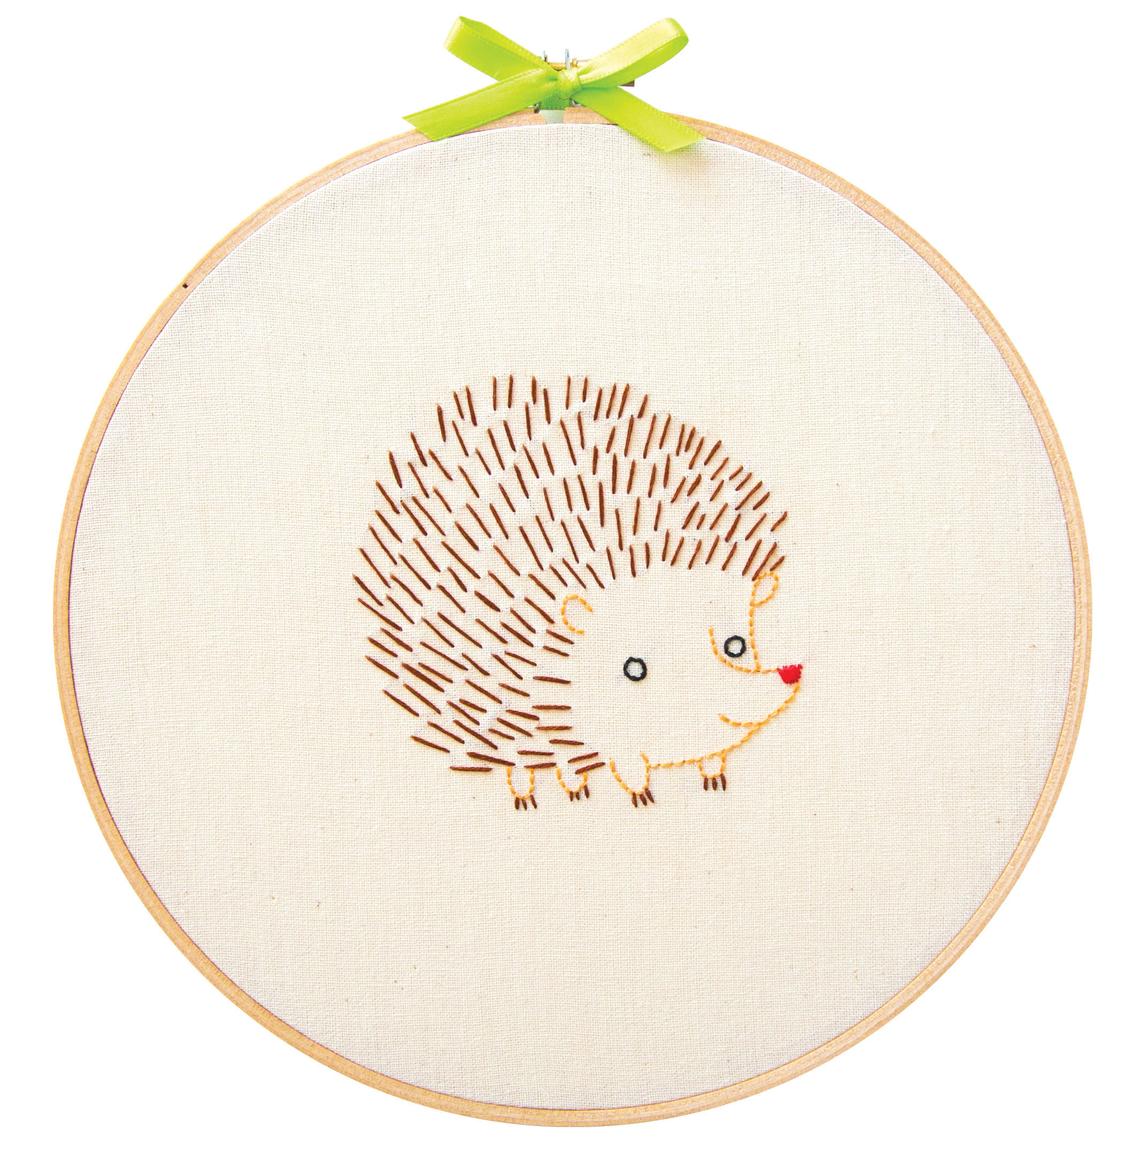 Hedgehog embroidery kit shown in an 8-inch hoop